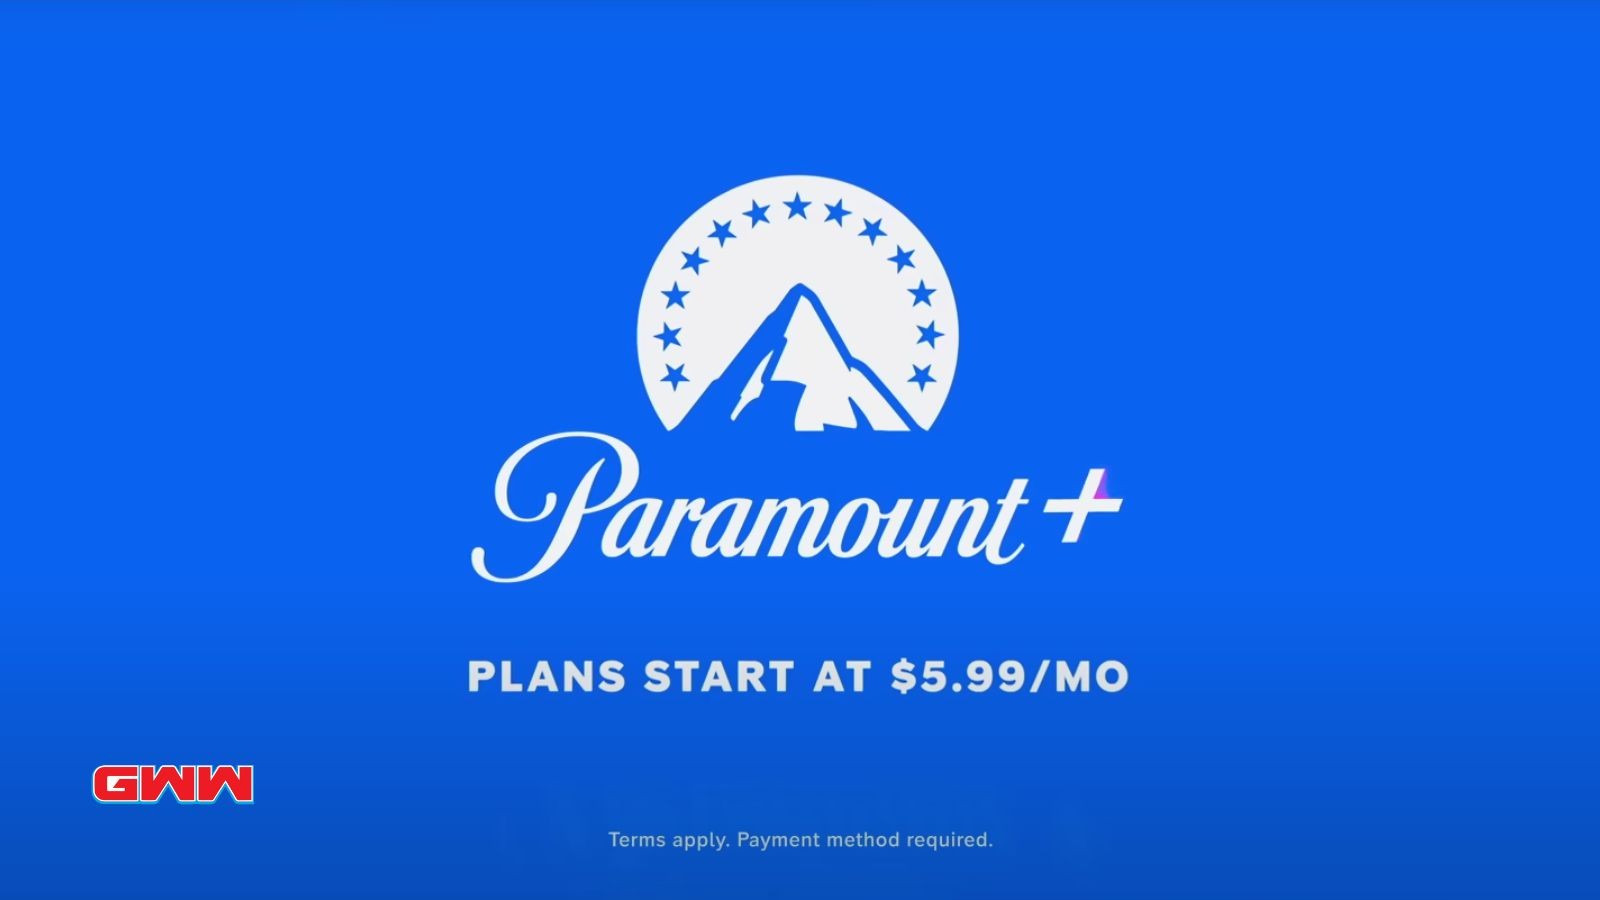 Paramount plus image with plans price